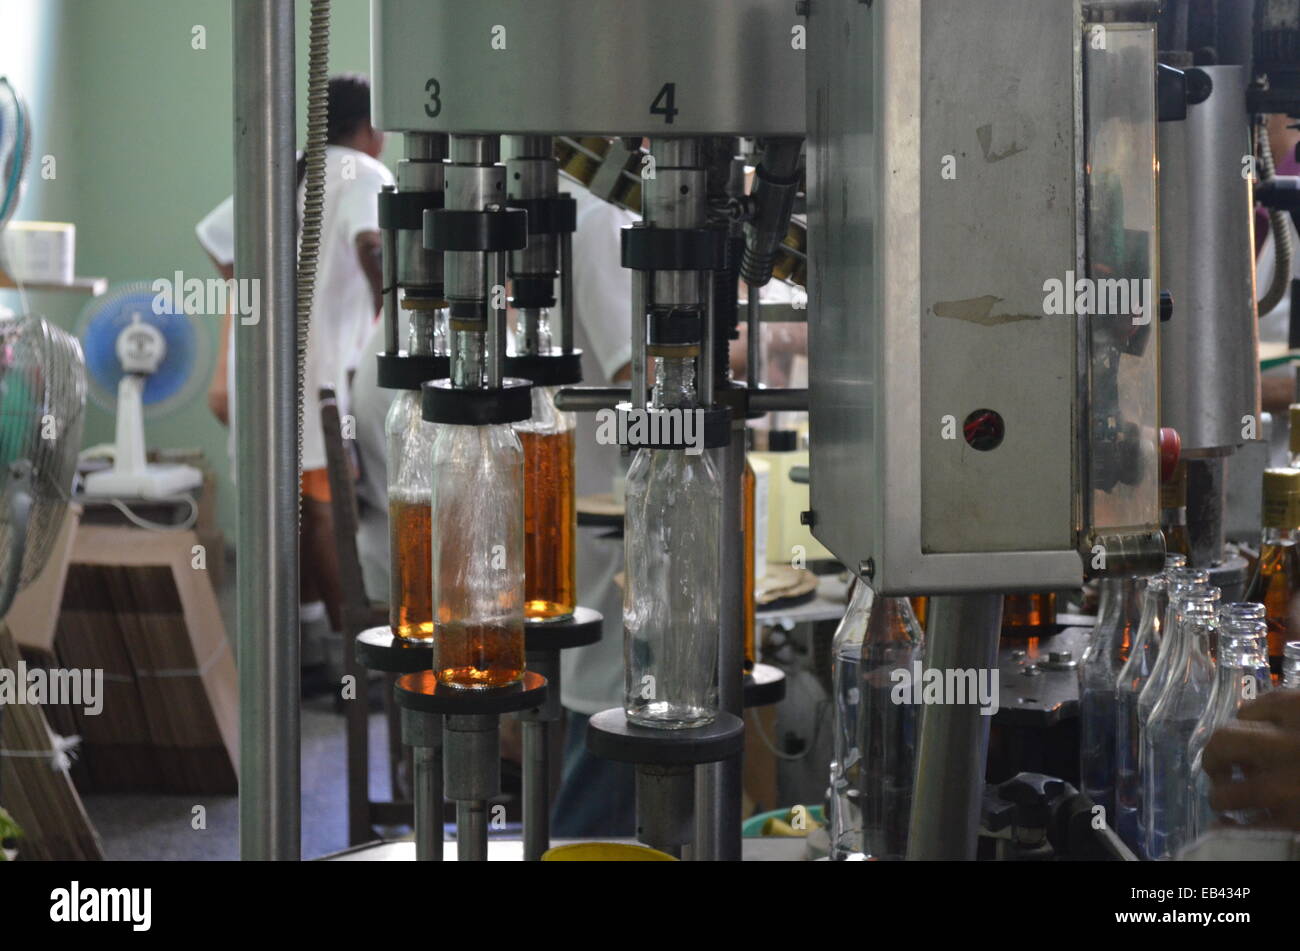 https://c8.alamy.com/comp/EB434P/a-rum-bottling-plant-in-the-pinar-del-rio-state-of-cuba-EB434P.jpg